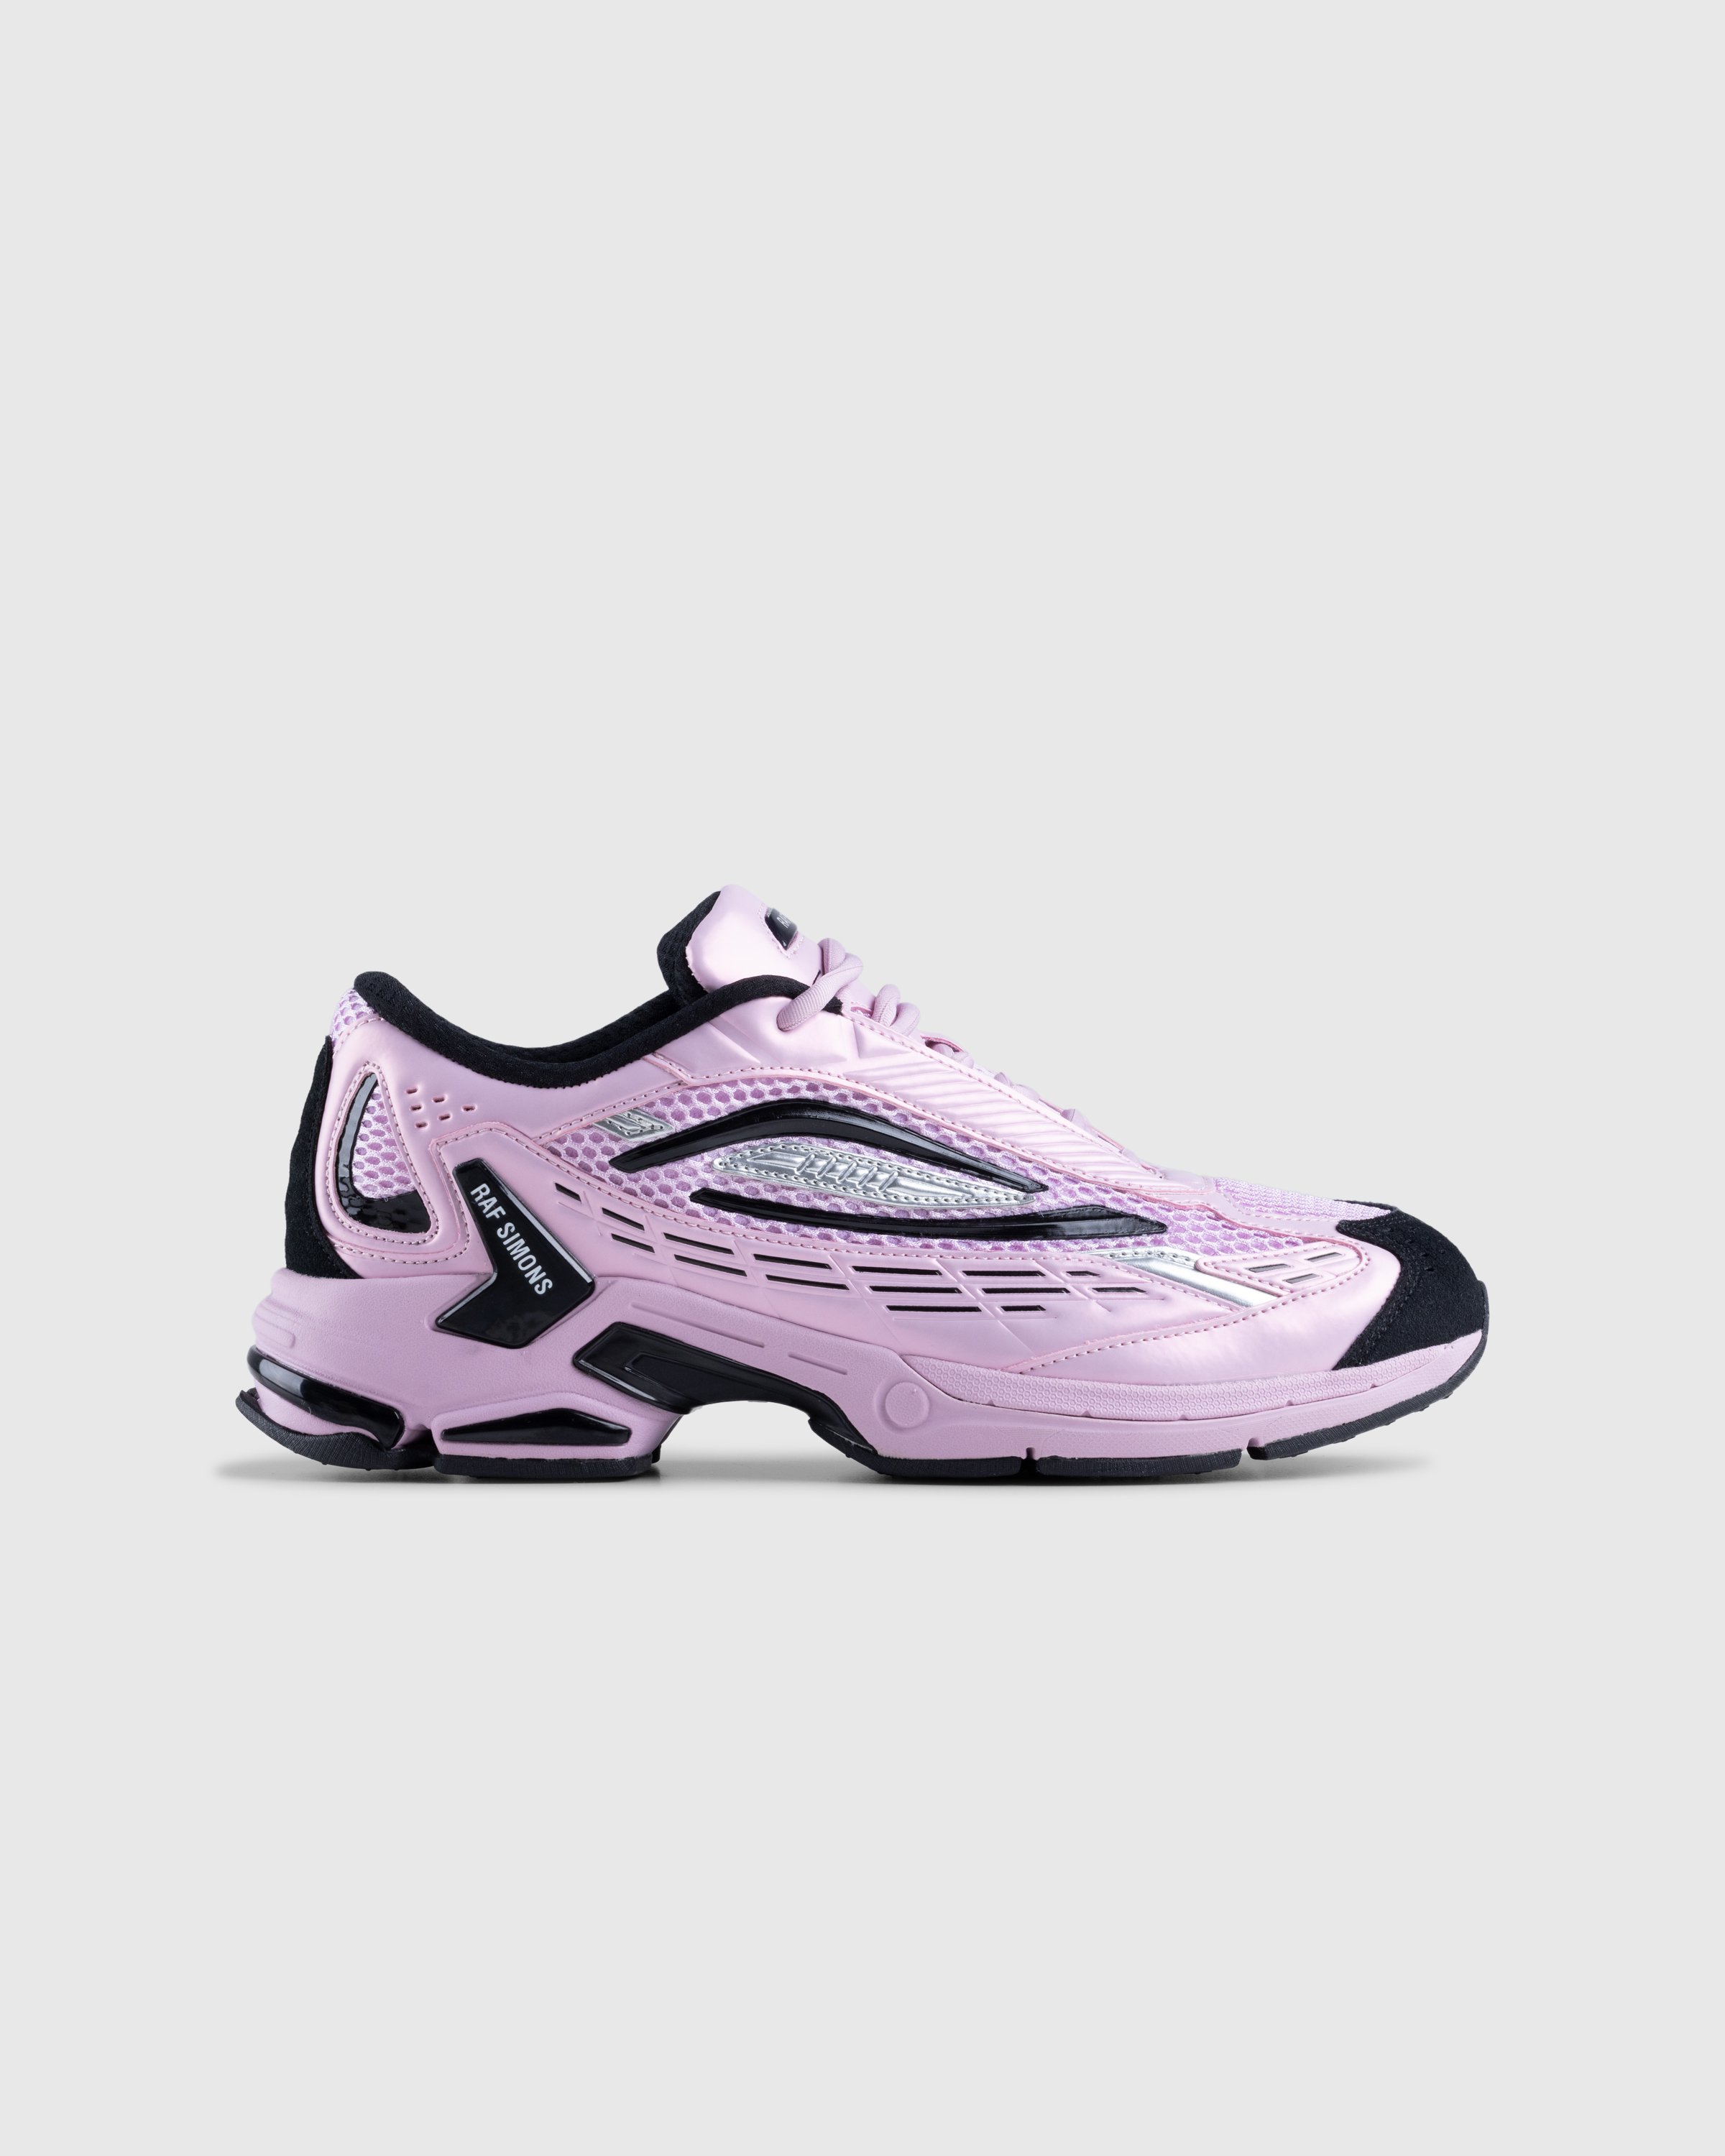 Raf Simons - ULTRASCEPTRE 0044 - Footwear - Pink - Image 1